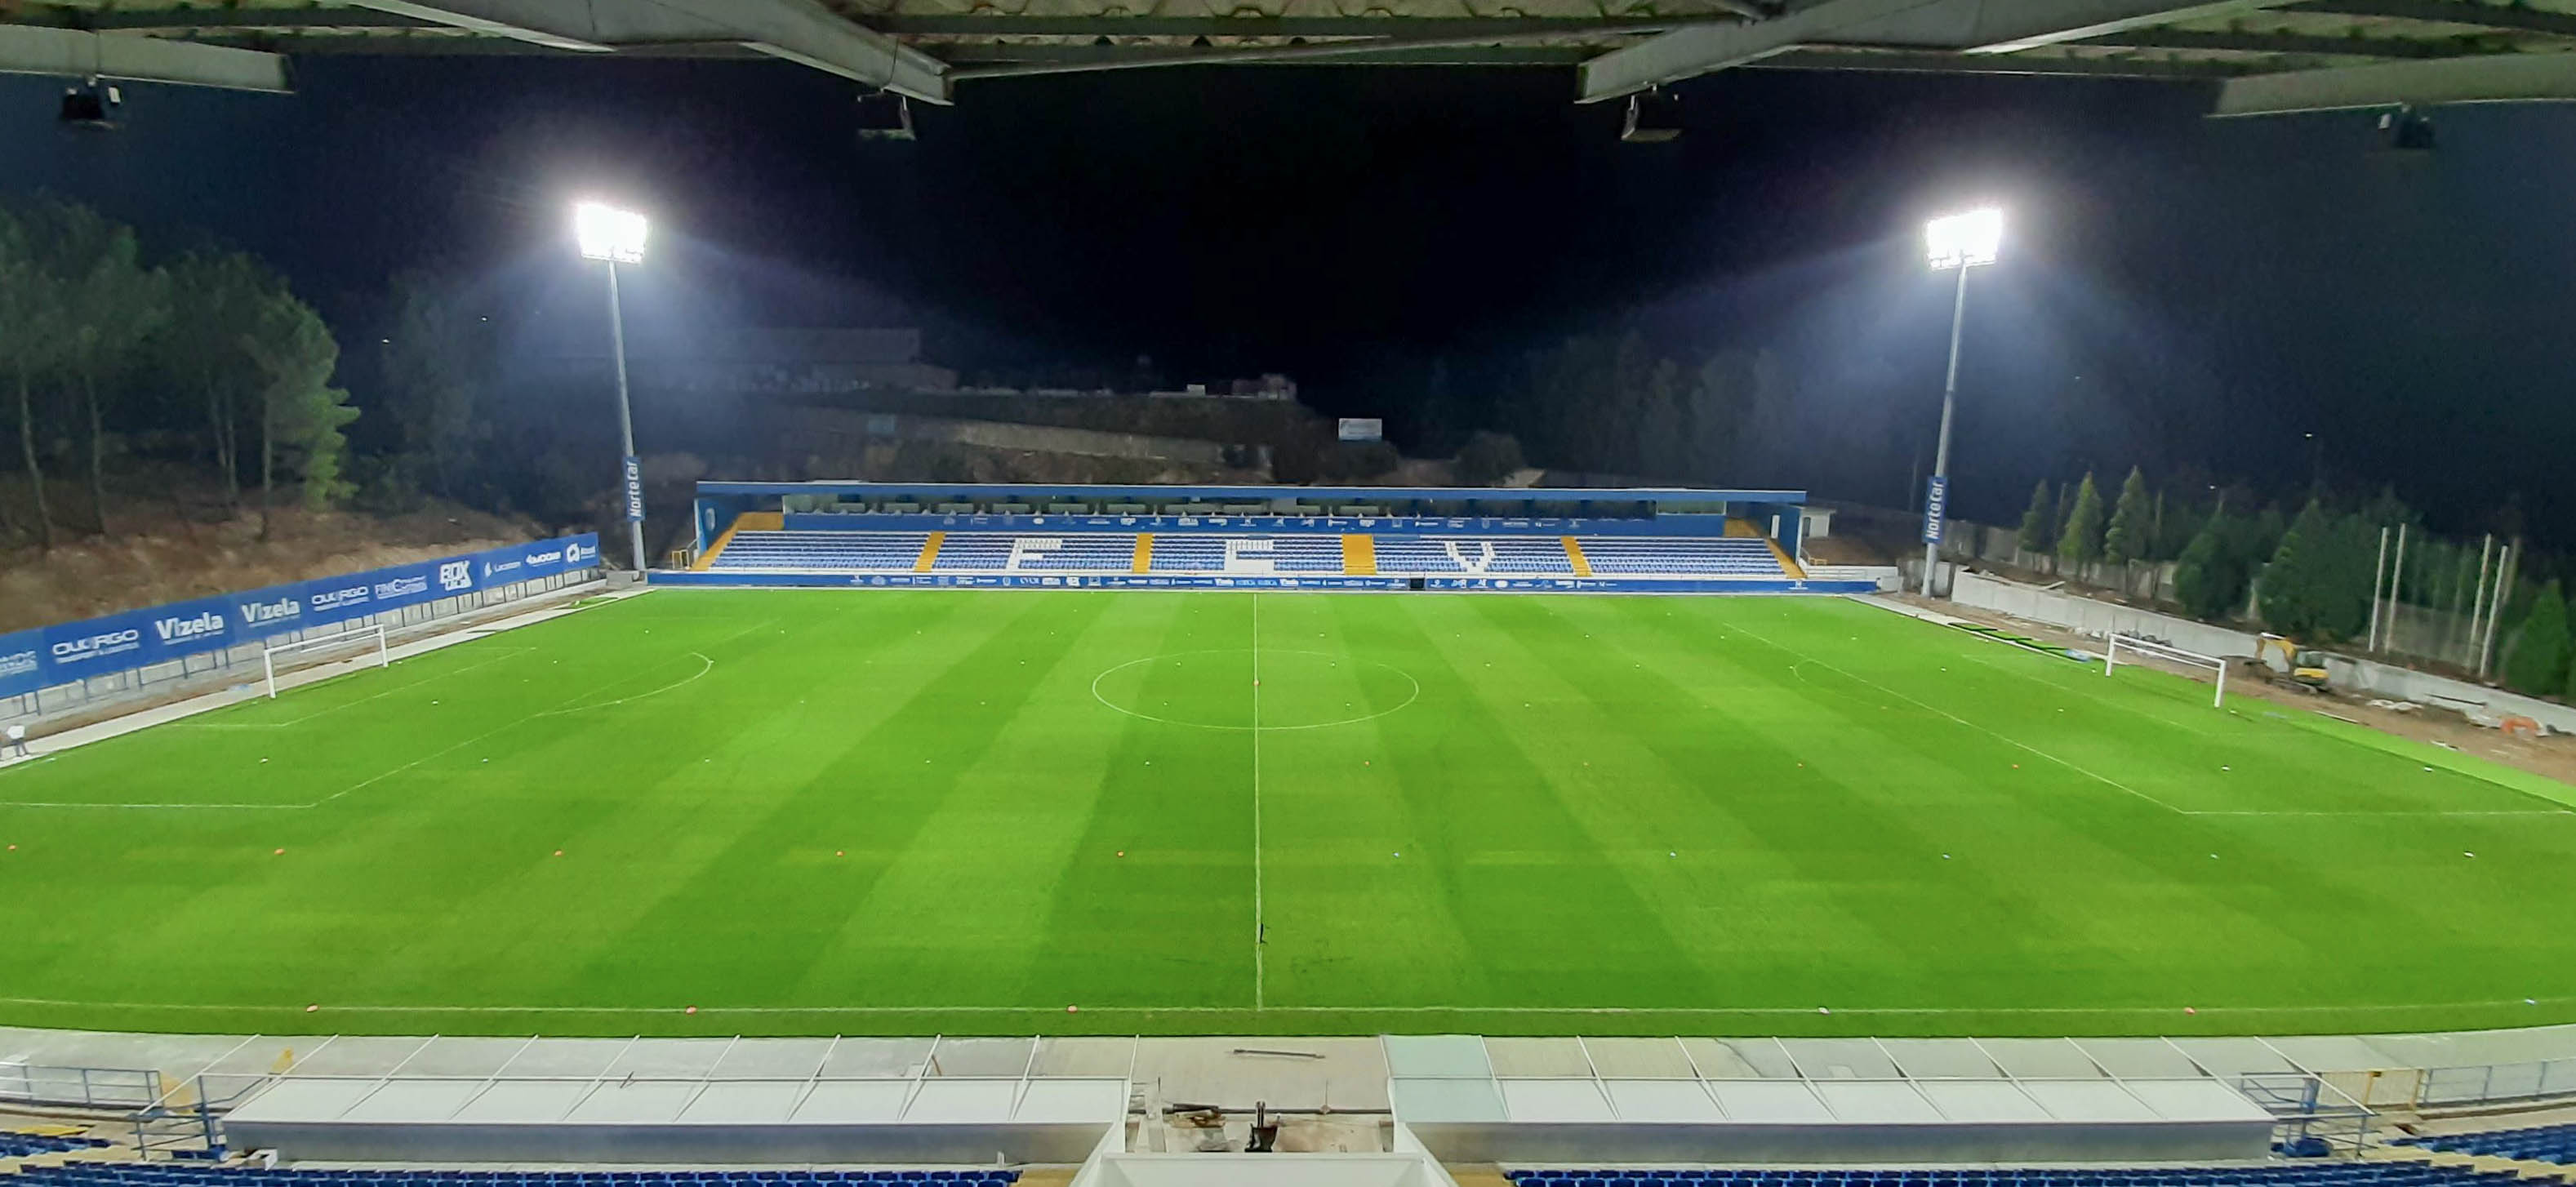 dael_industria_metalurgica_lda-Sports lighting at FC Vizela Stadium